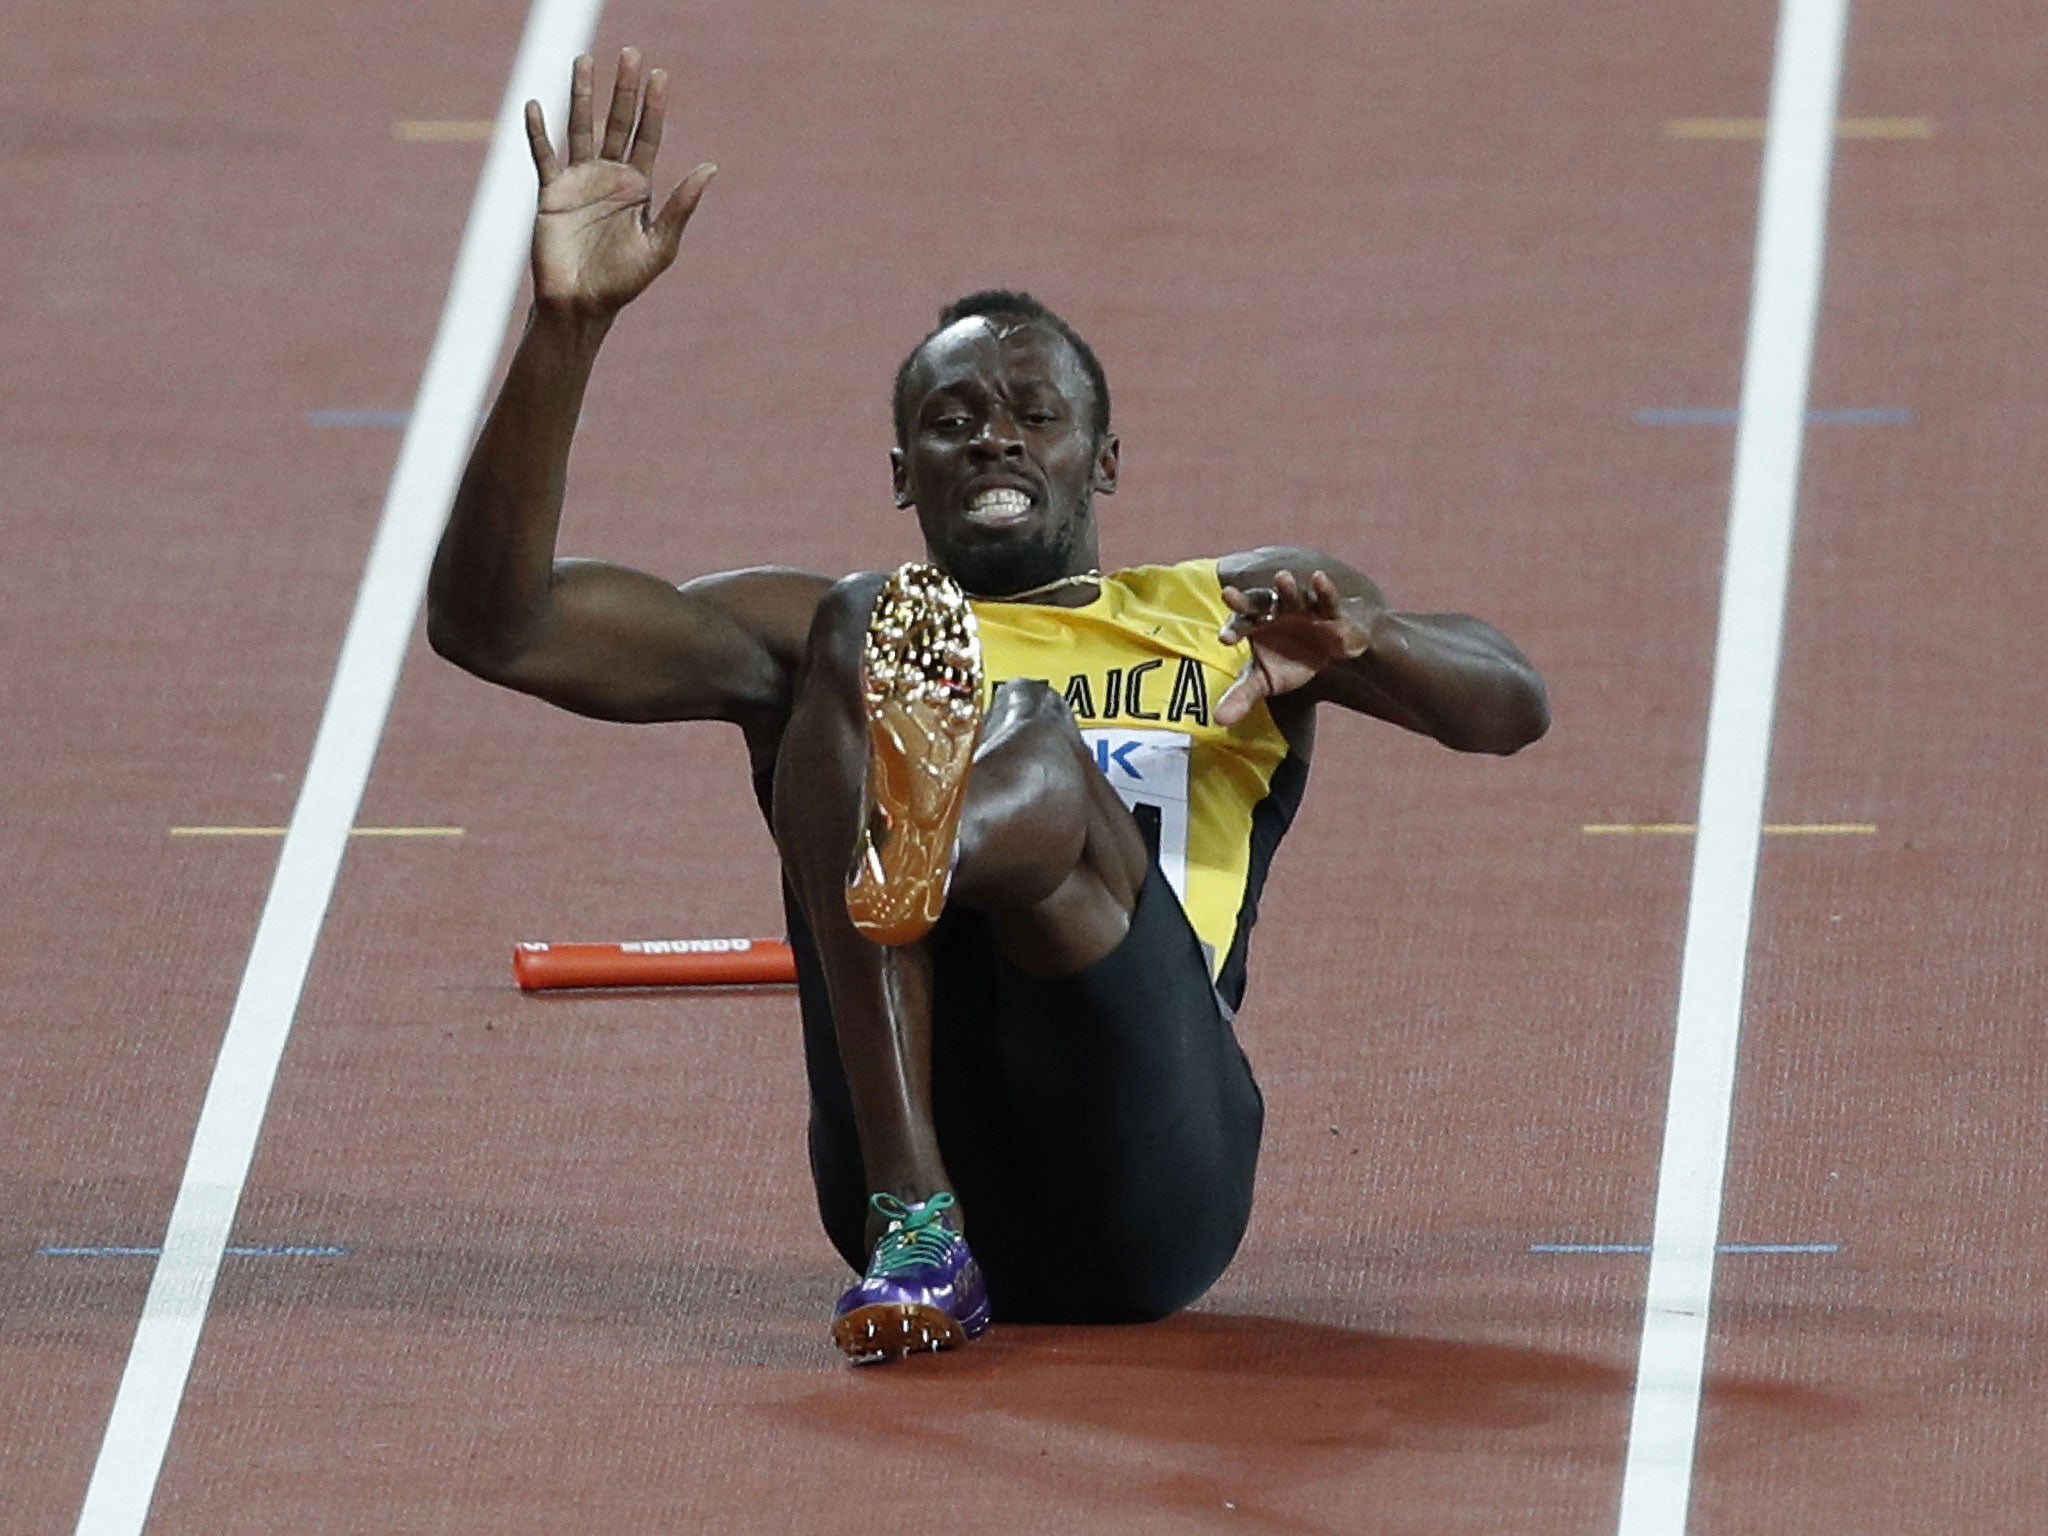 Jamaica failed to finish due to Bolt's injury